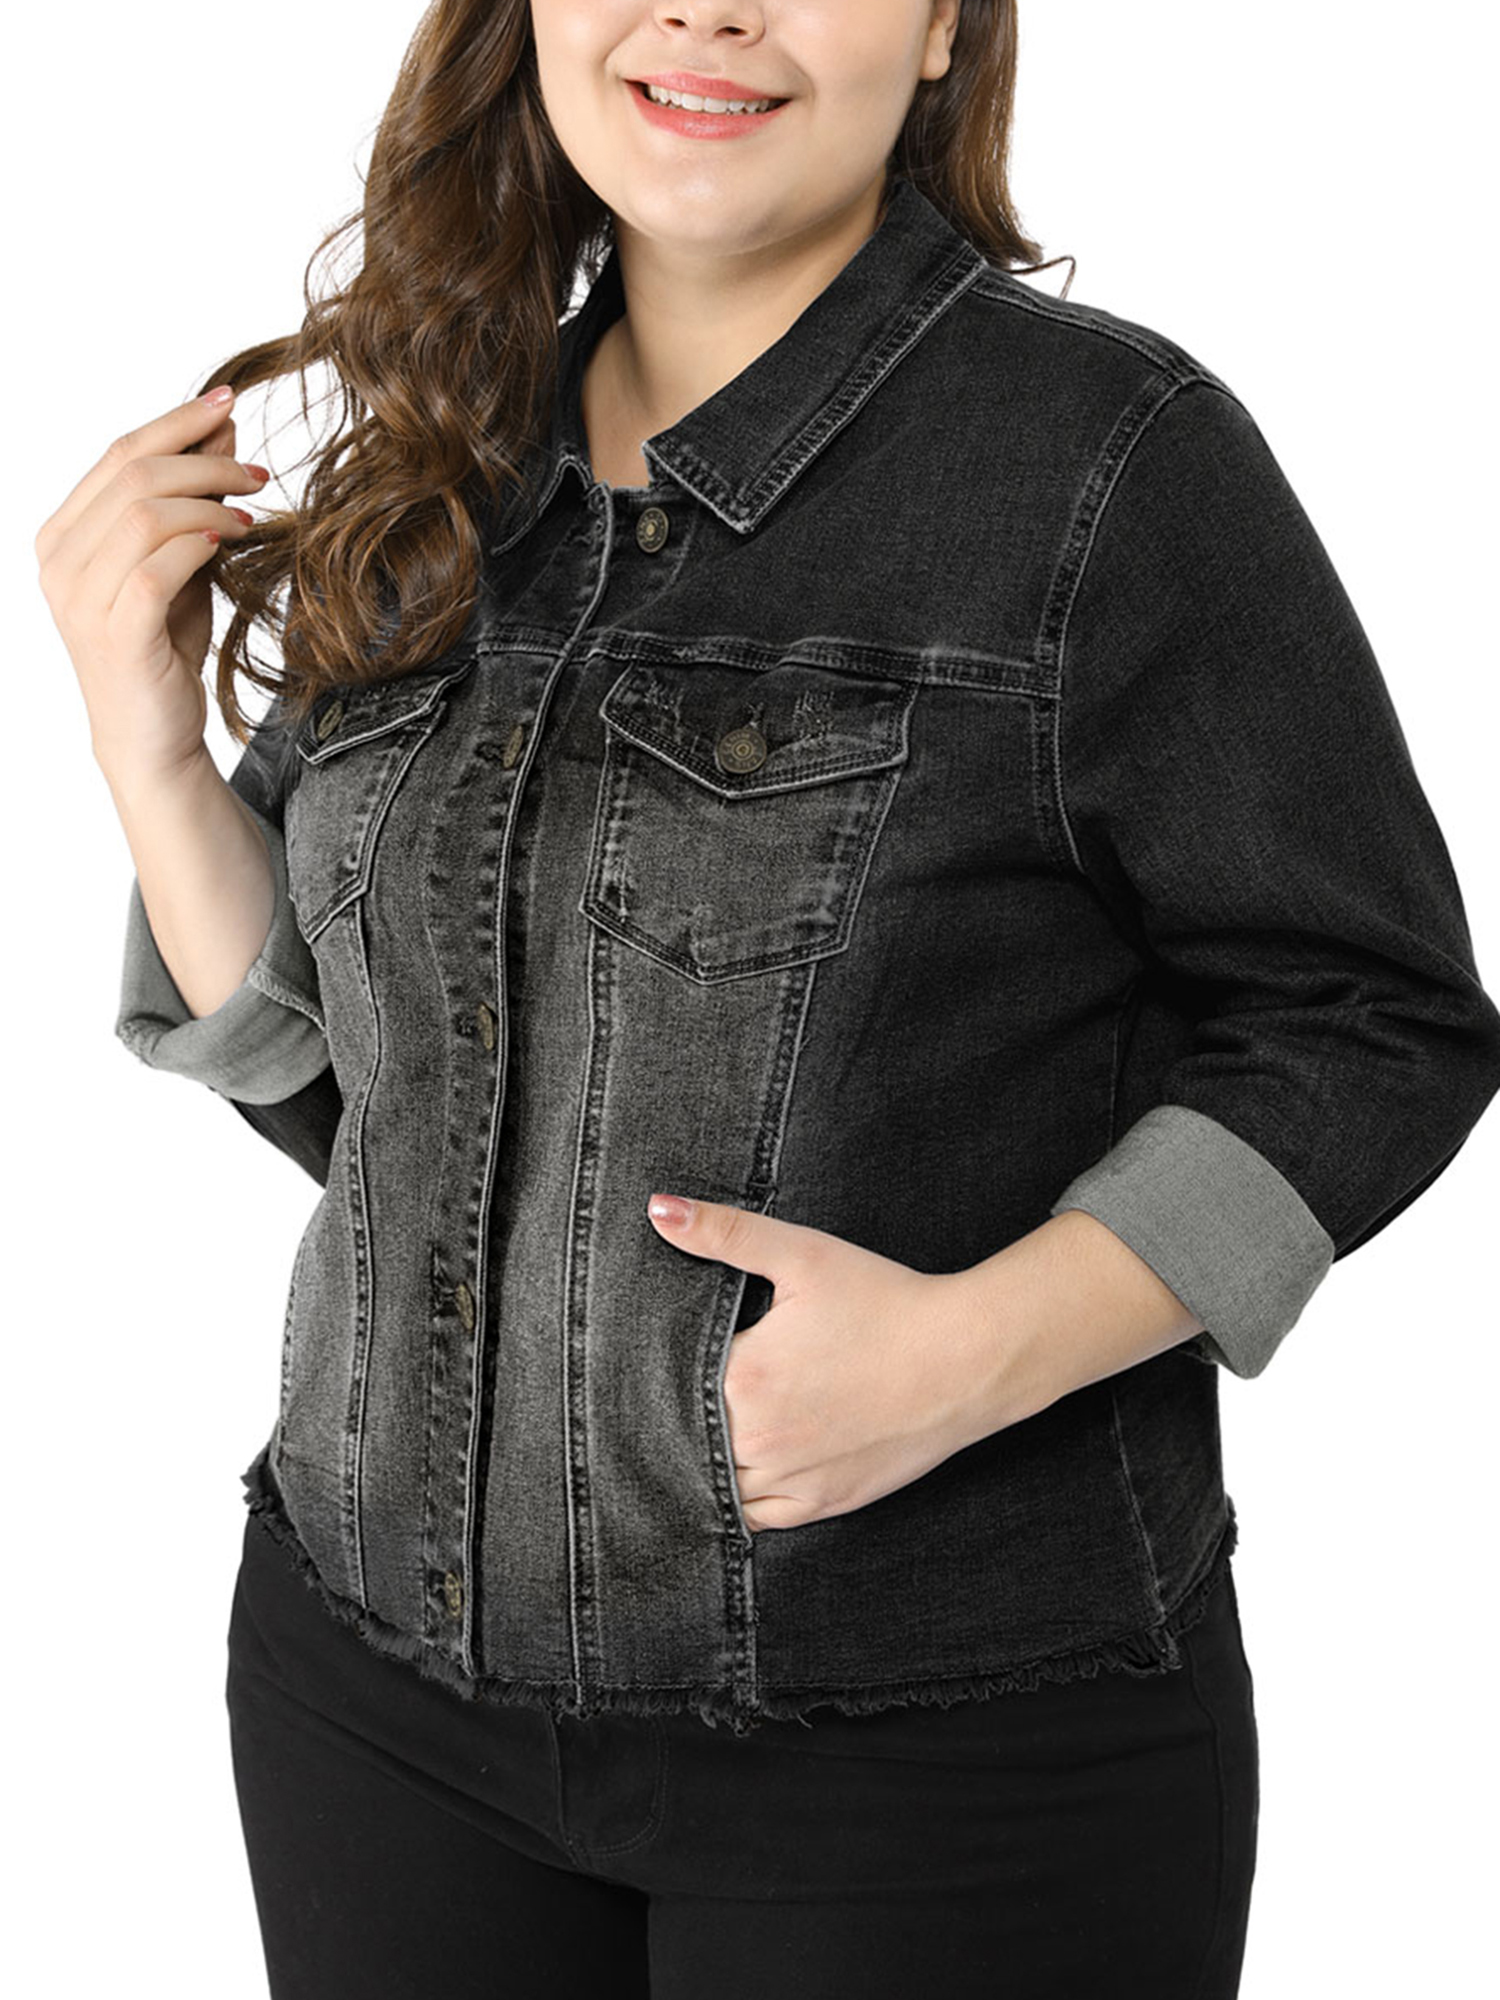 Unique Bargains Women's Plus Size Washed Front Frayed Classic Denim Jacket - image 3 of 8